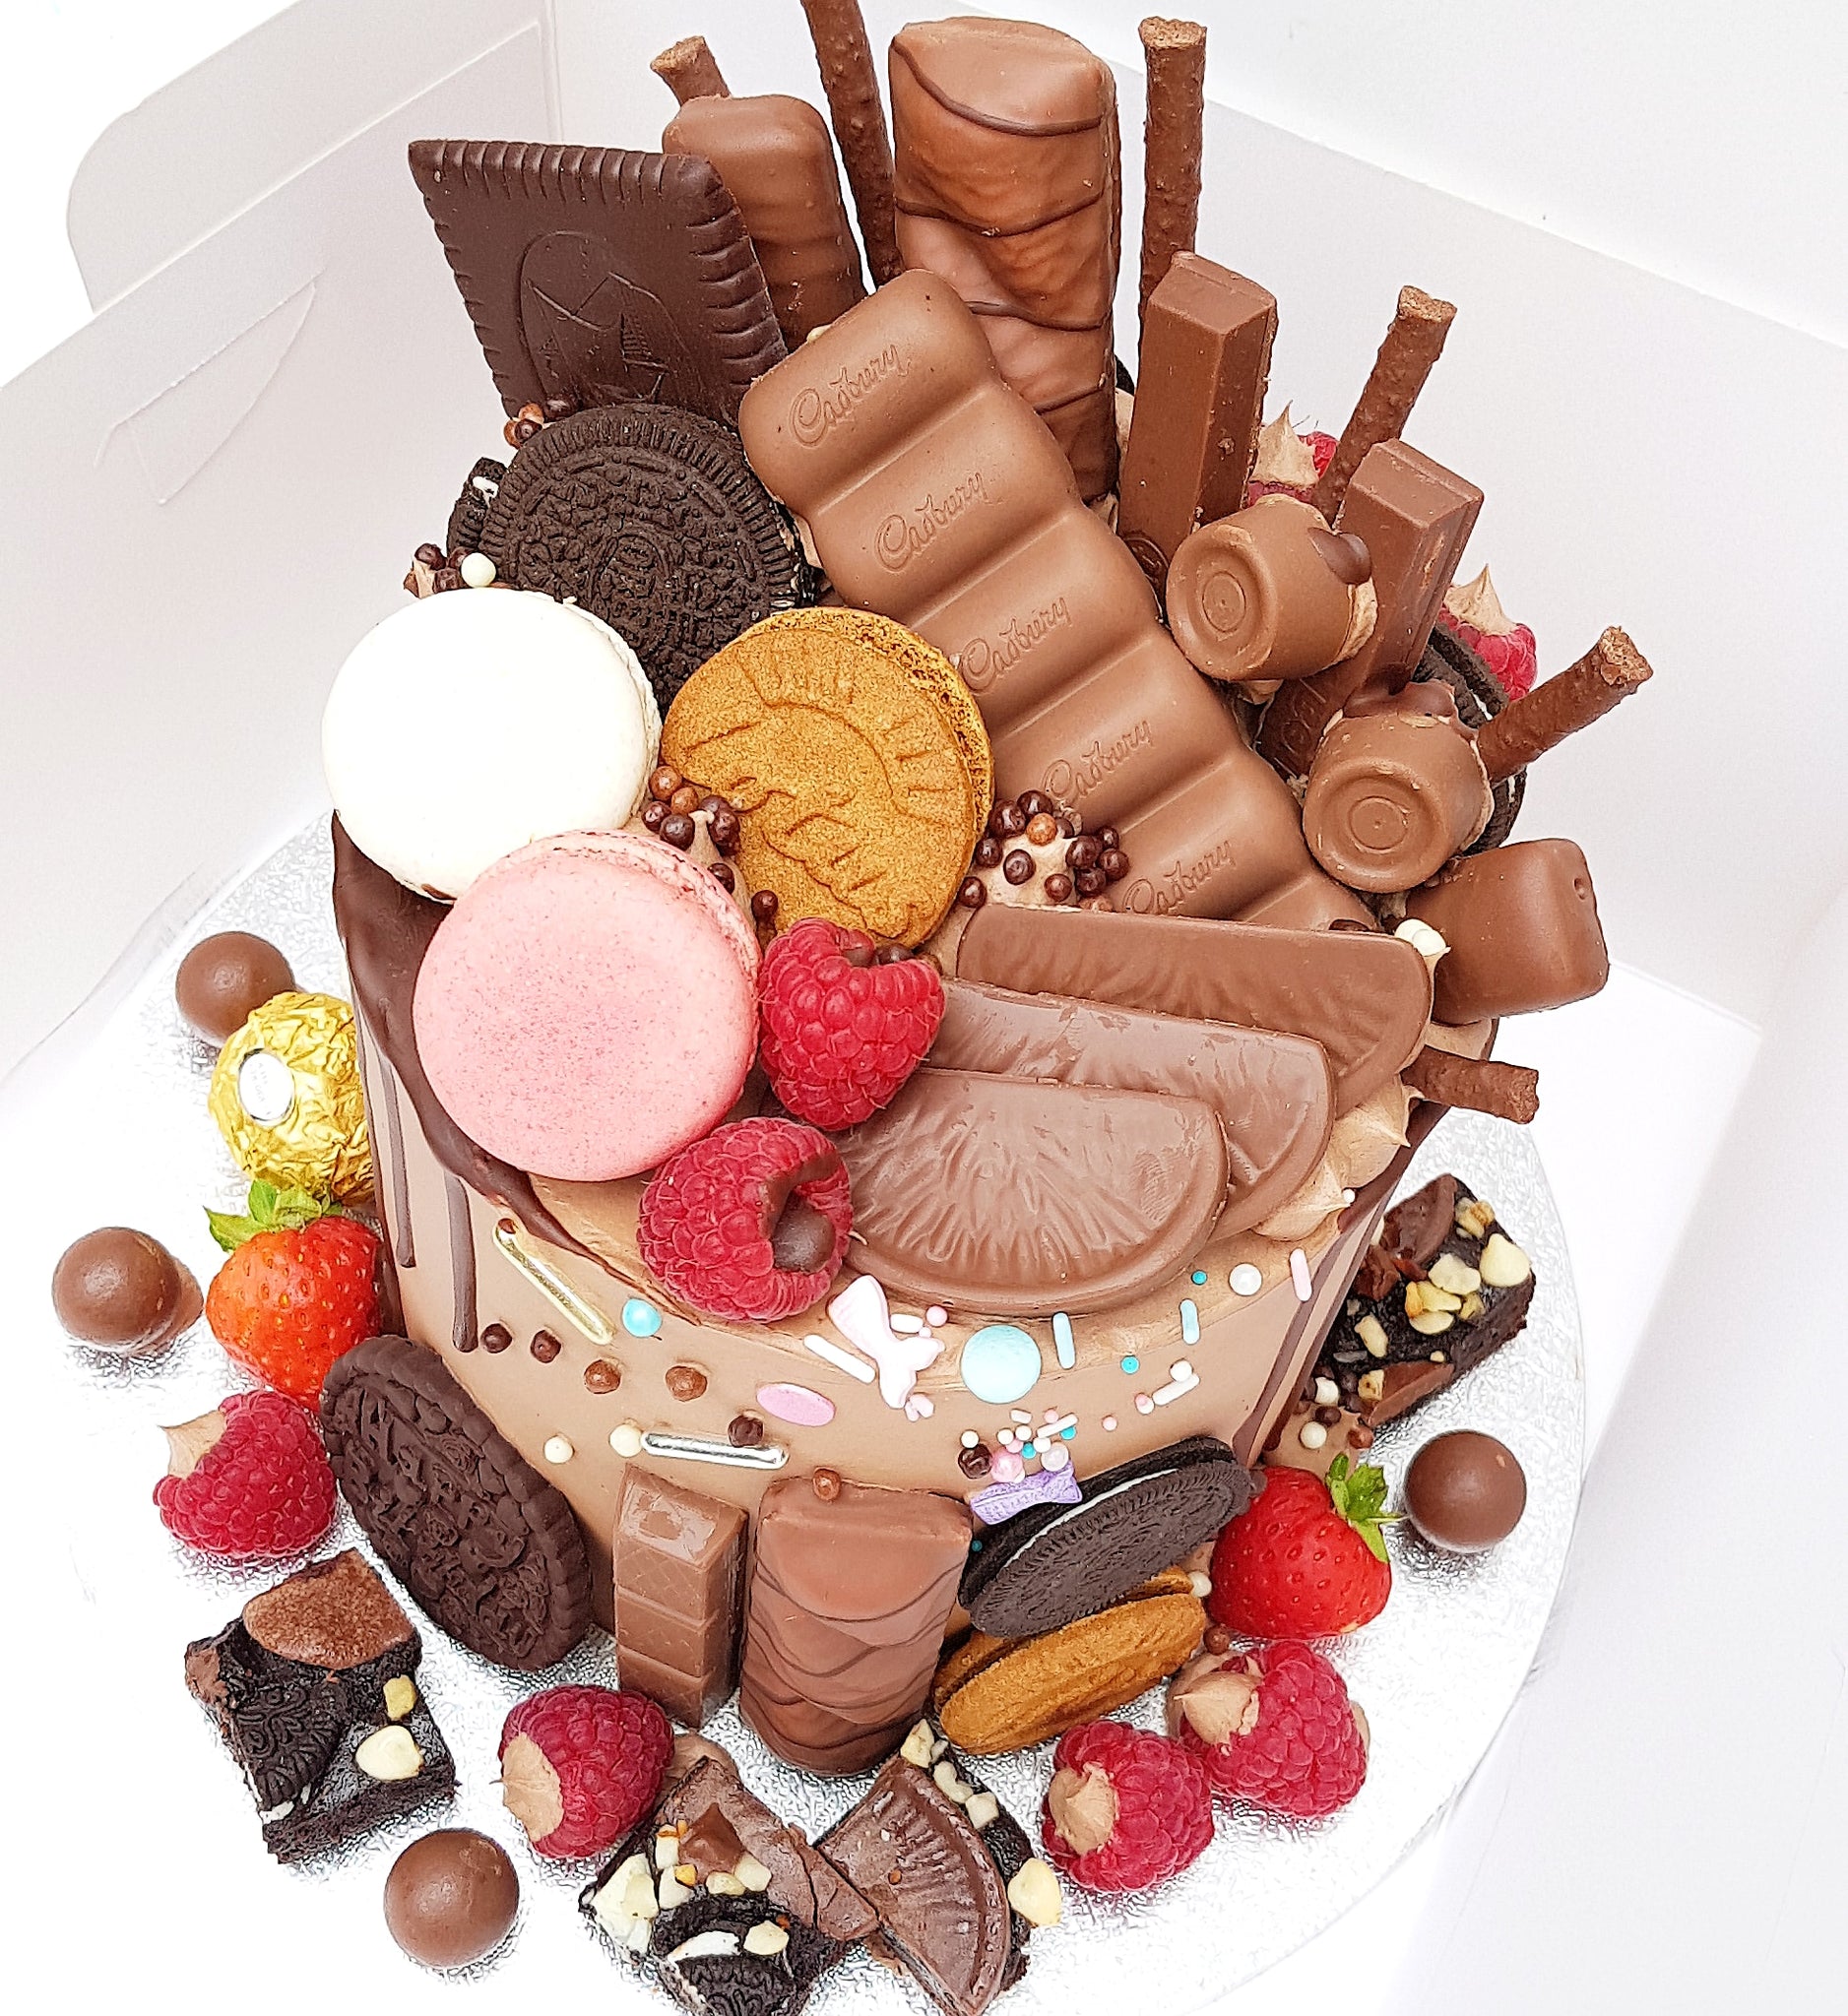 Aggregate more than 189 cadbury birthday cake best